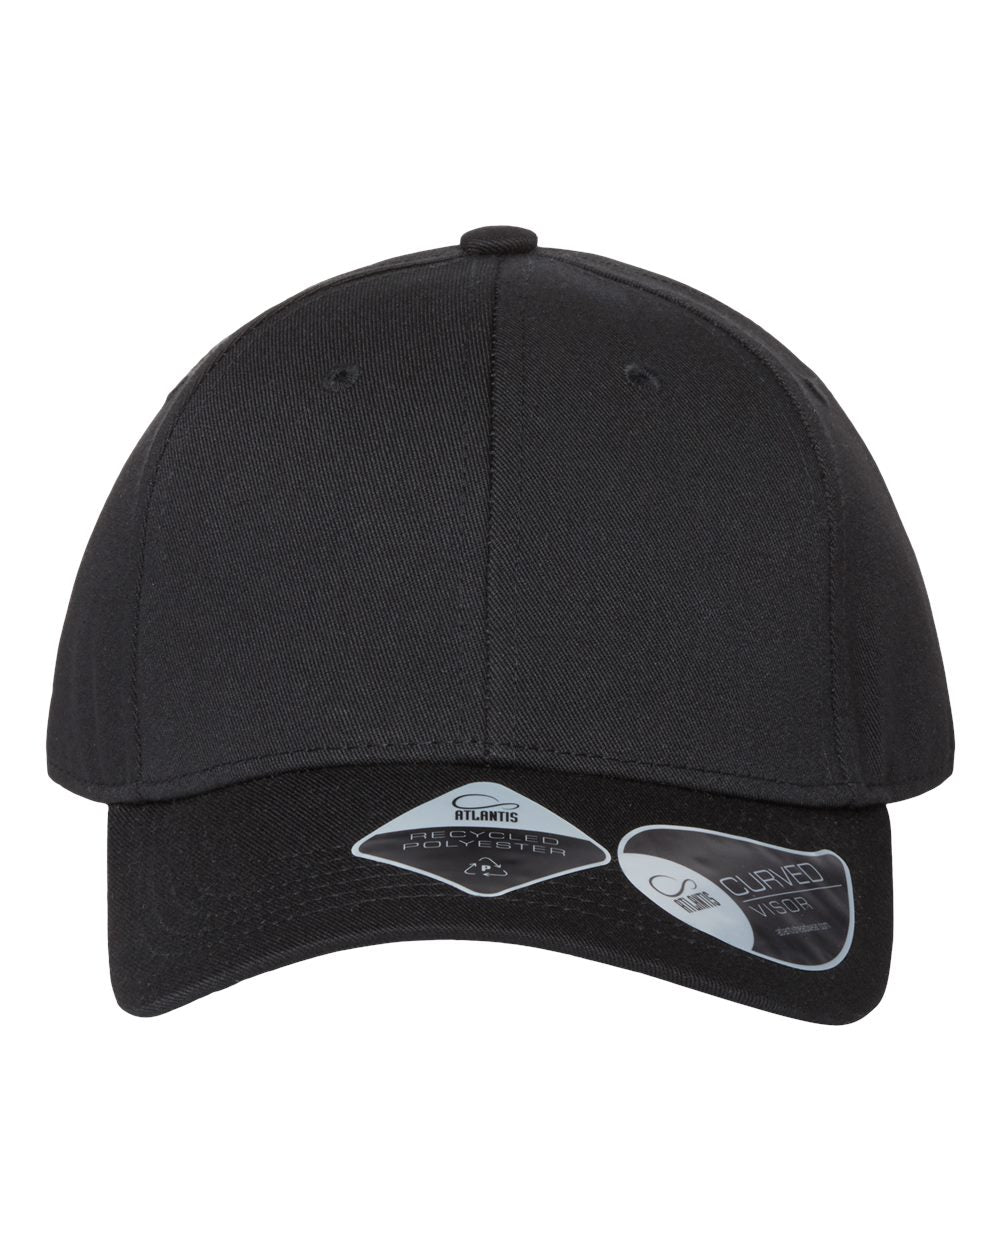 Customizable Atlantis Headwear Structured Joshua Hat in black.